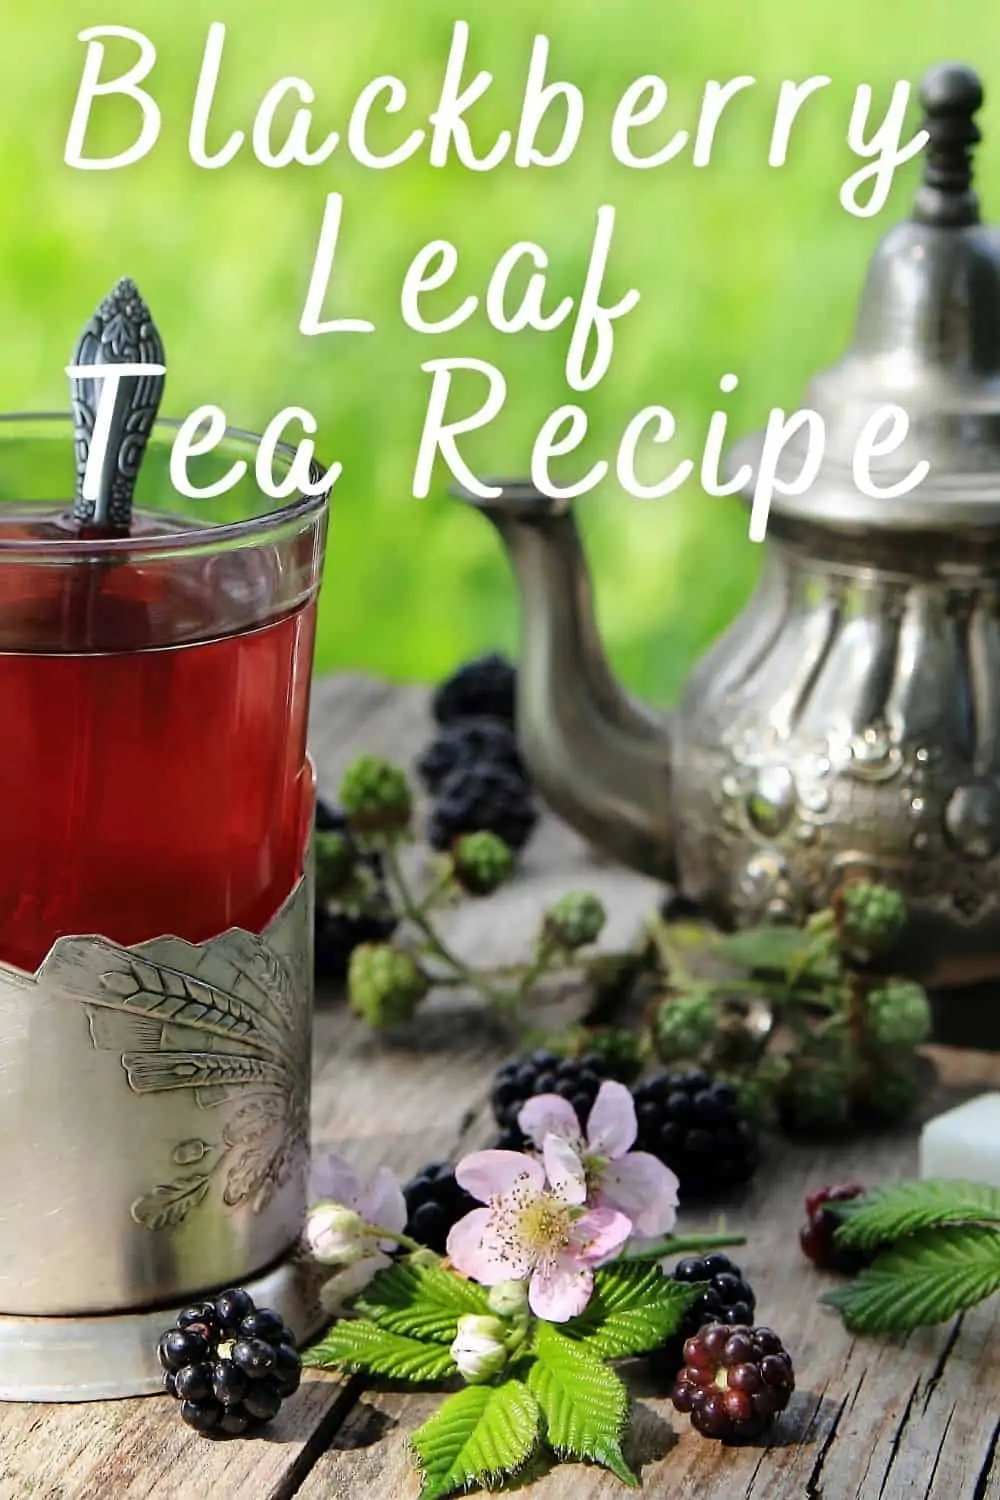 Blackberry leaf tea recipe